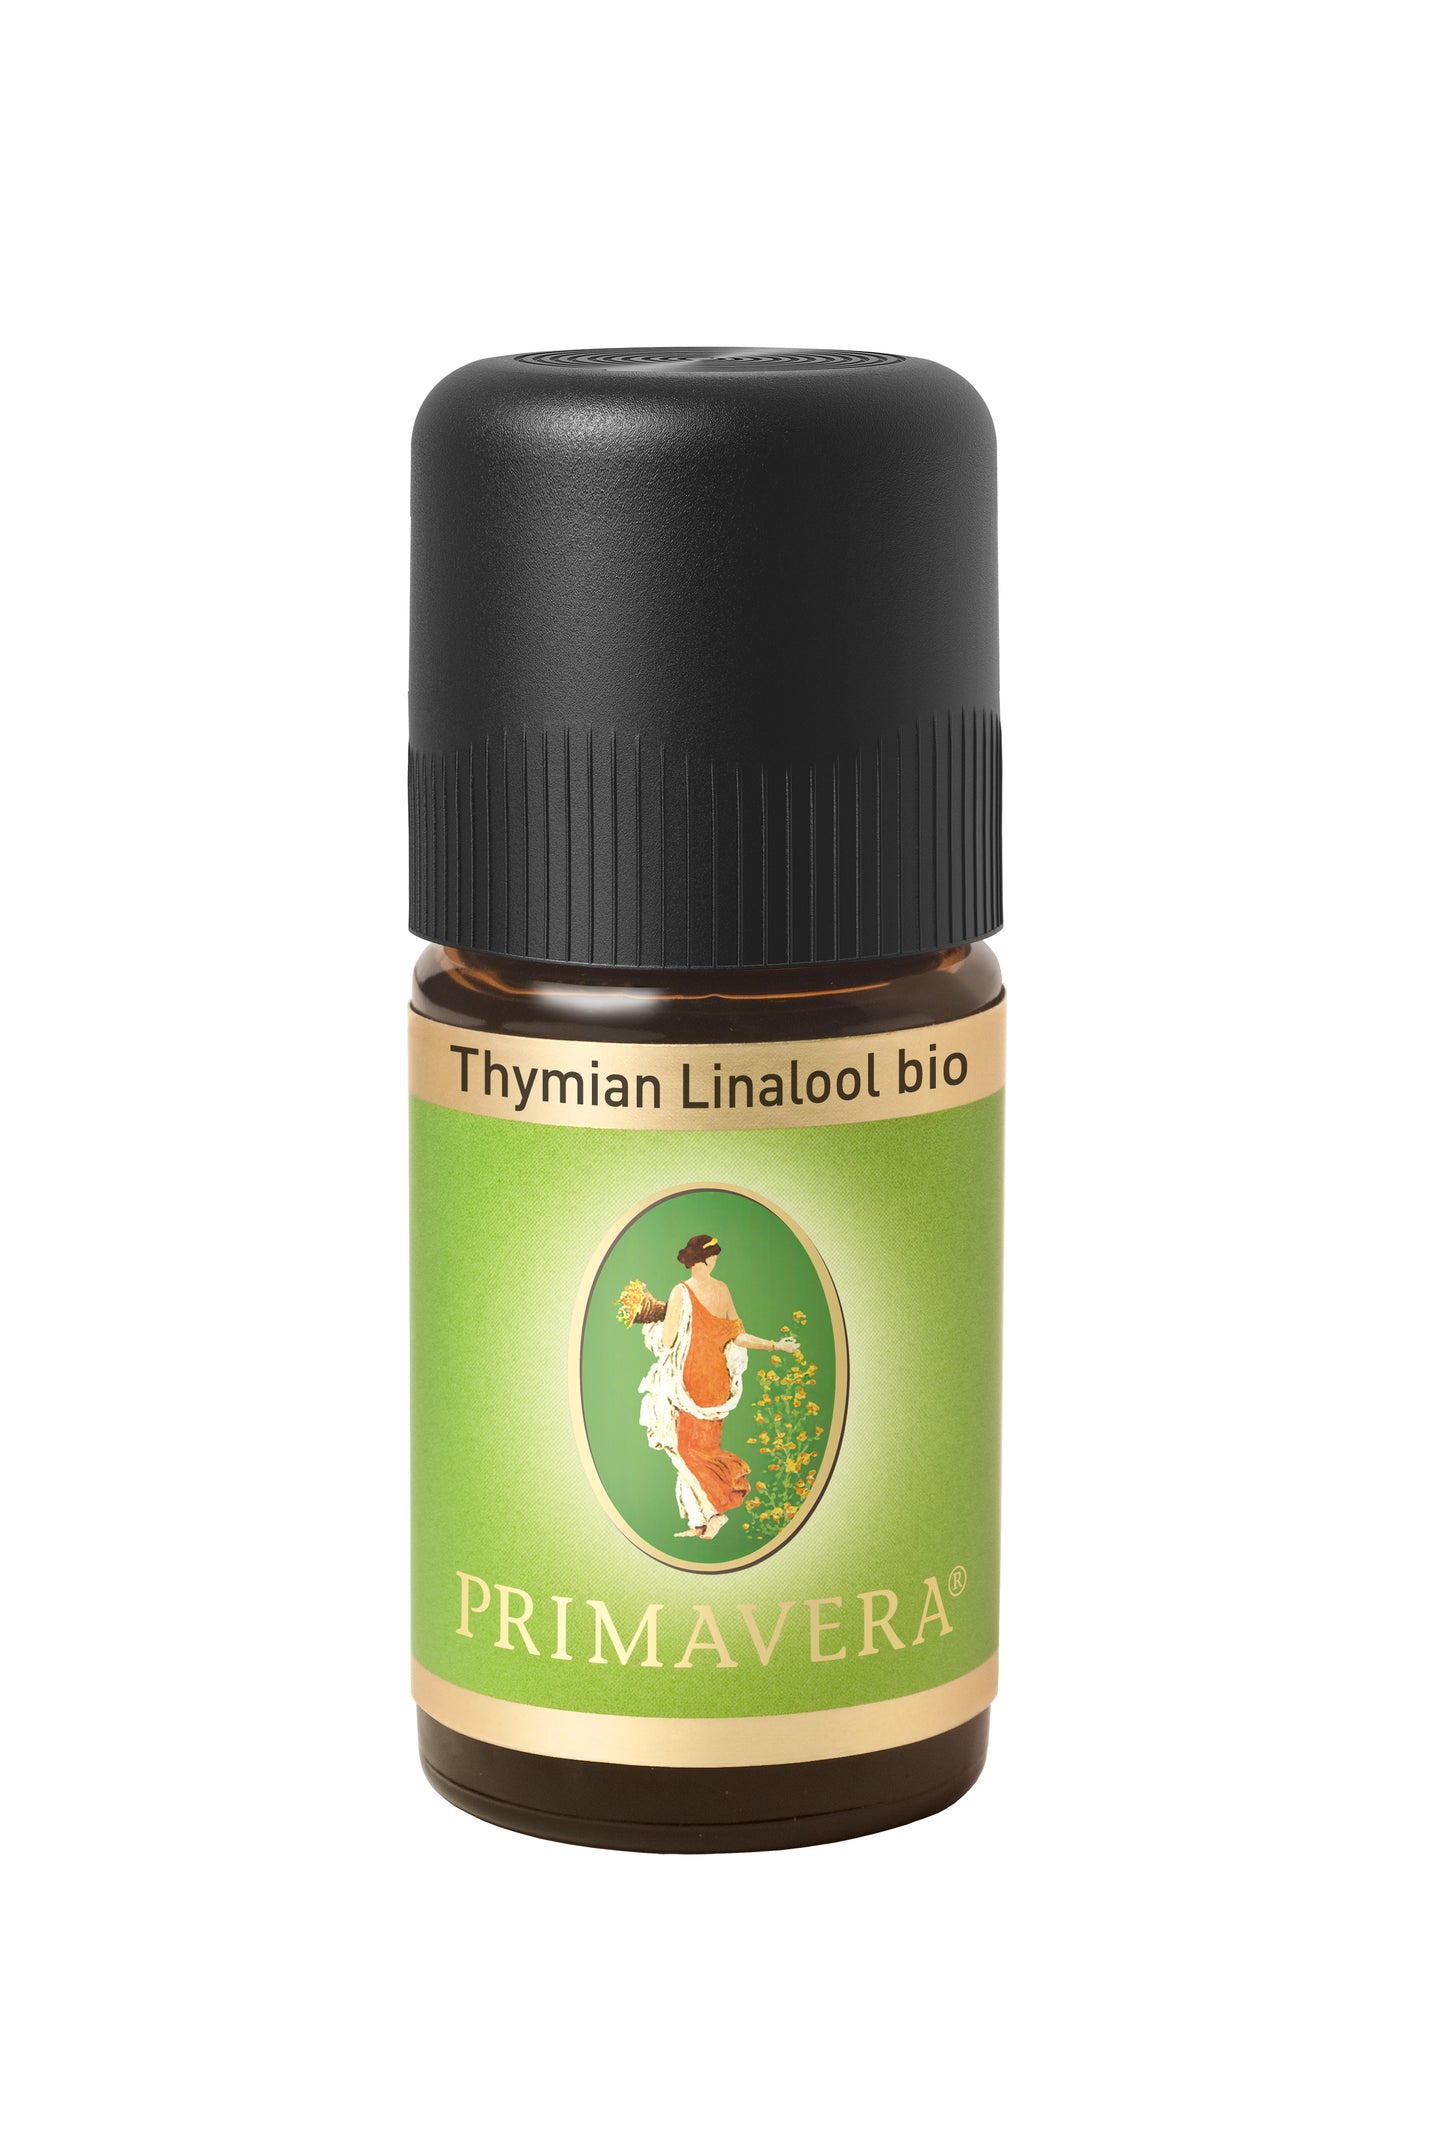 Primavera - Thymian Linalool bio* 5 ml